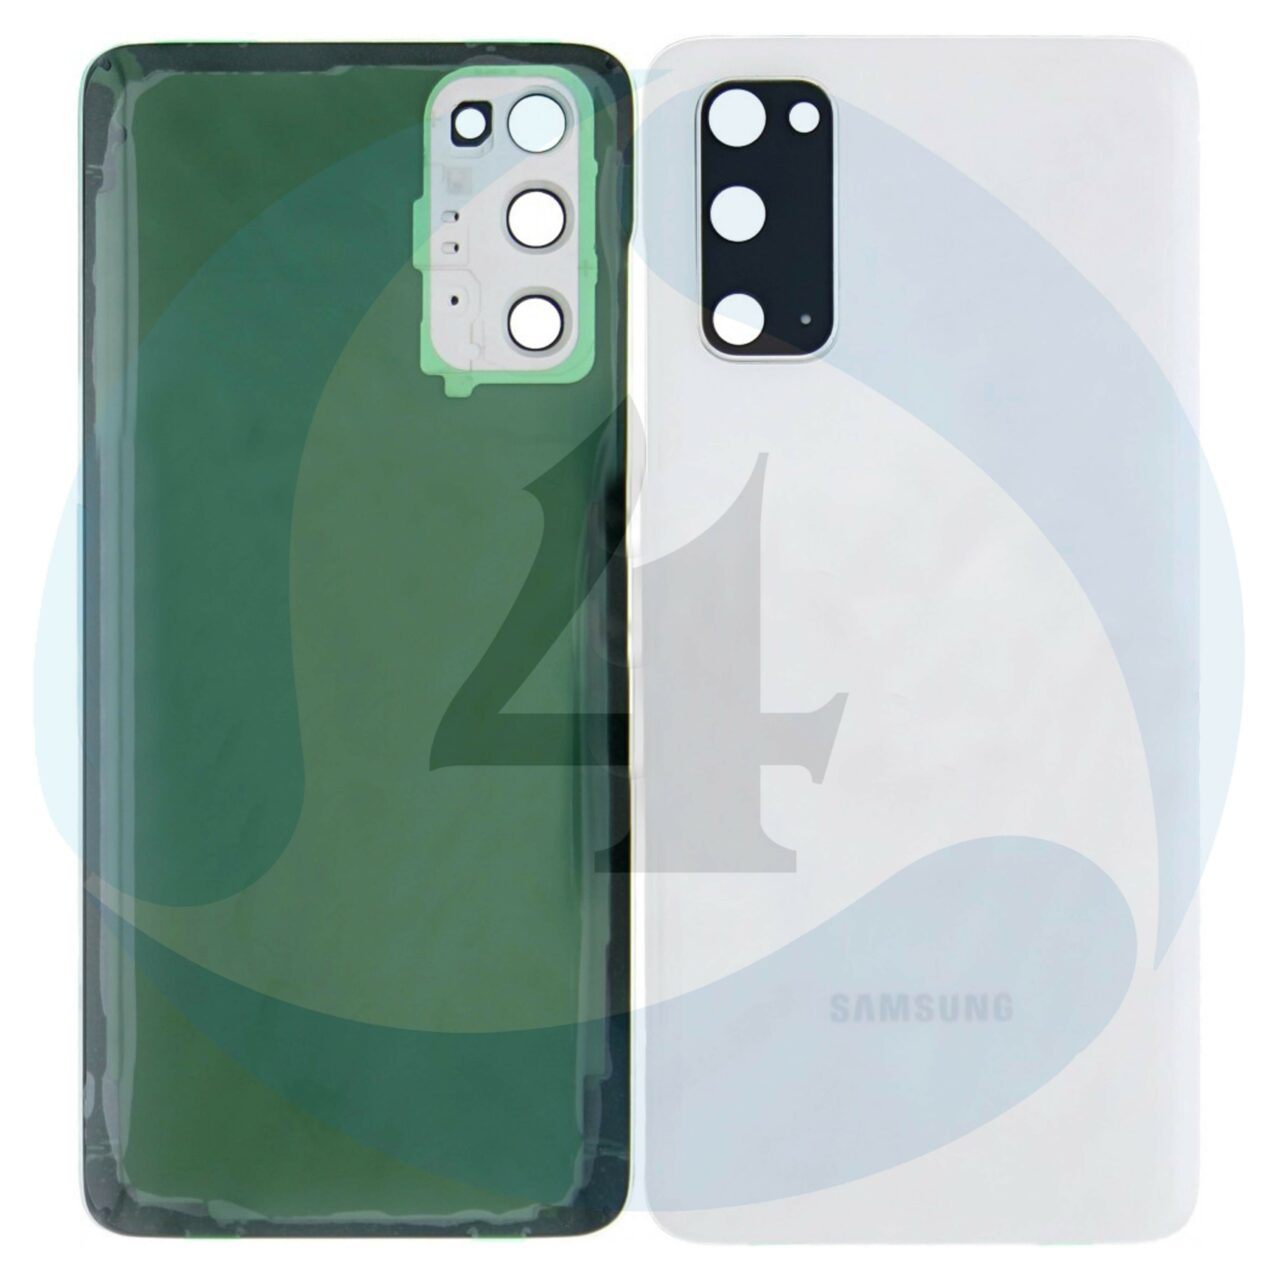 Samsung Galaxy S20 SM G980 F SM G981 B Battery Cover Cloud White